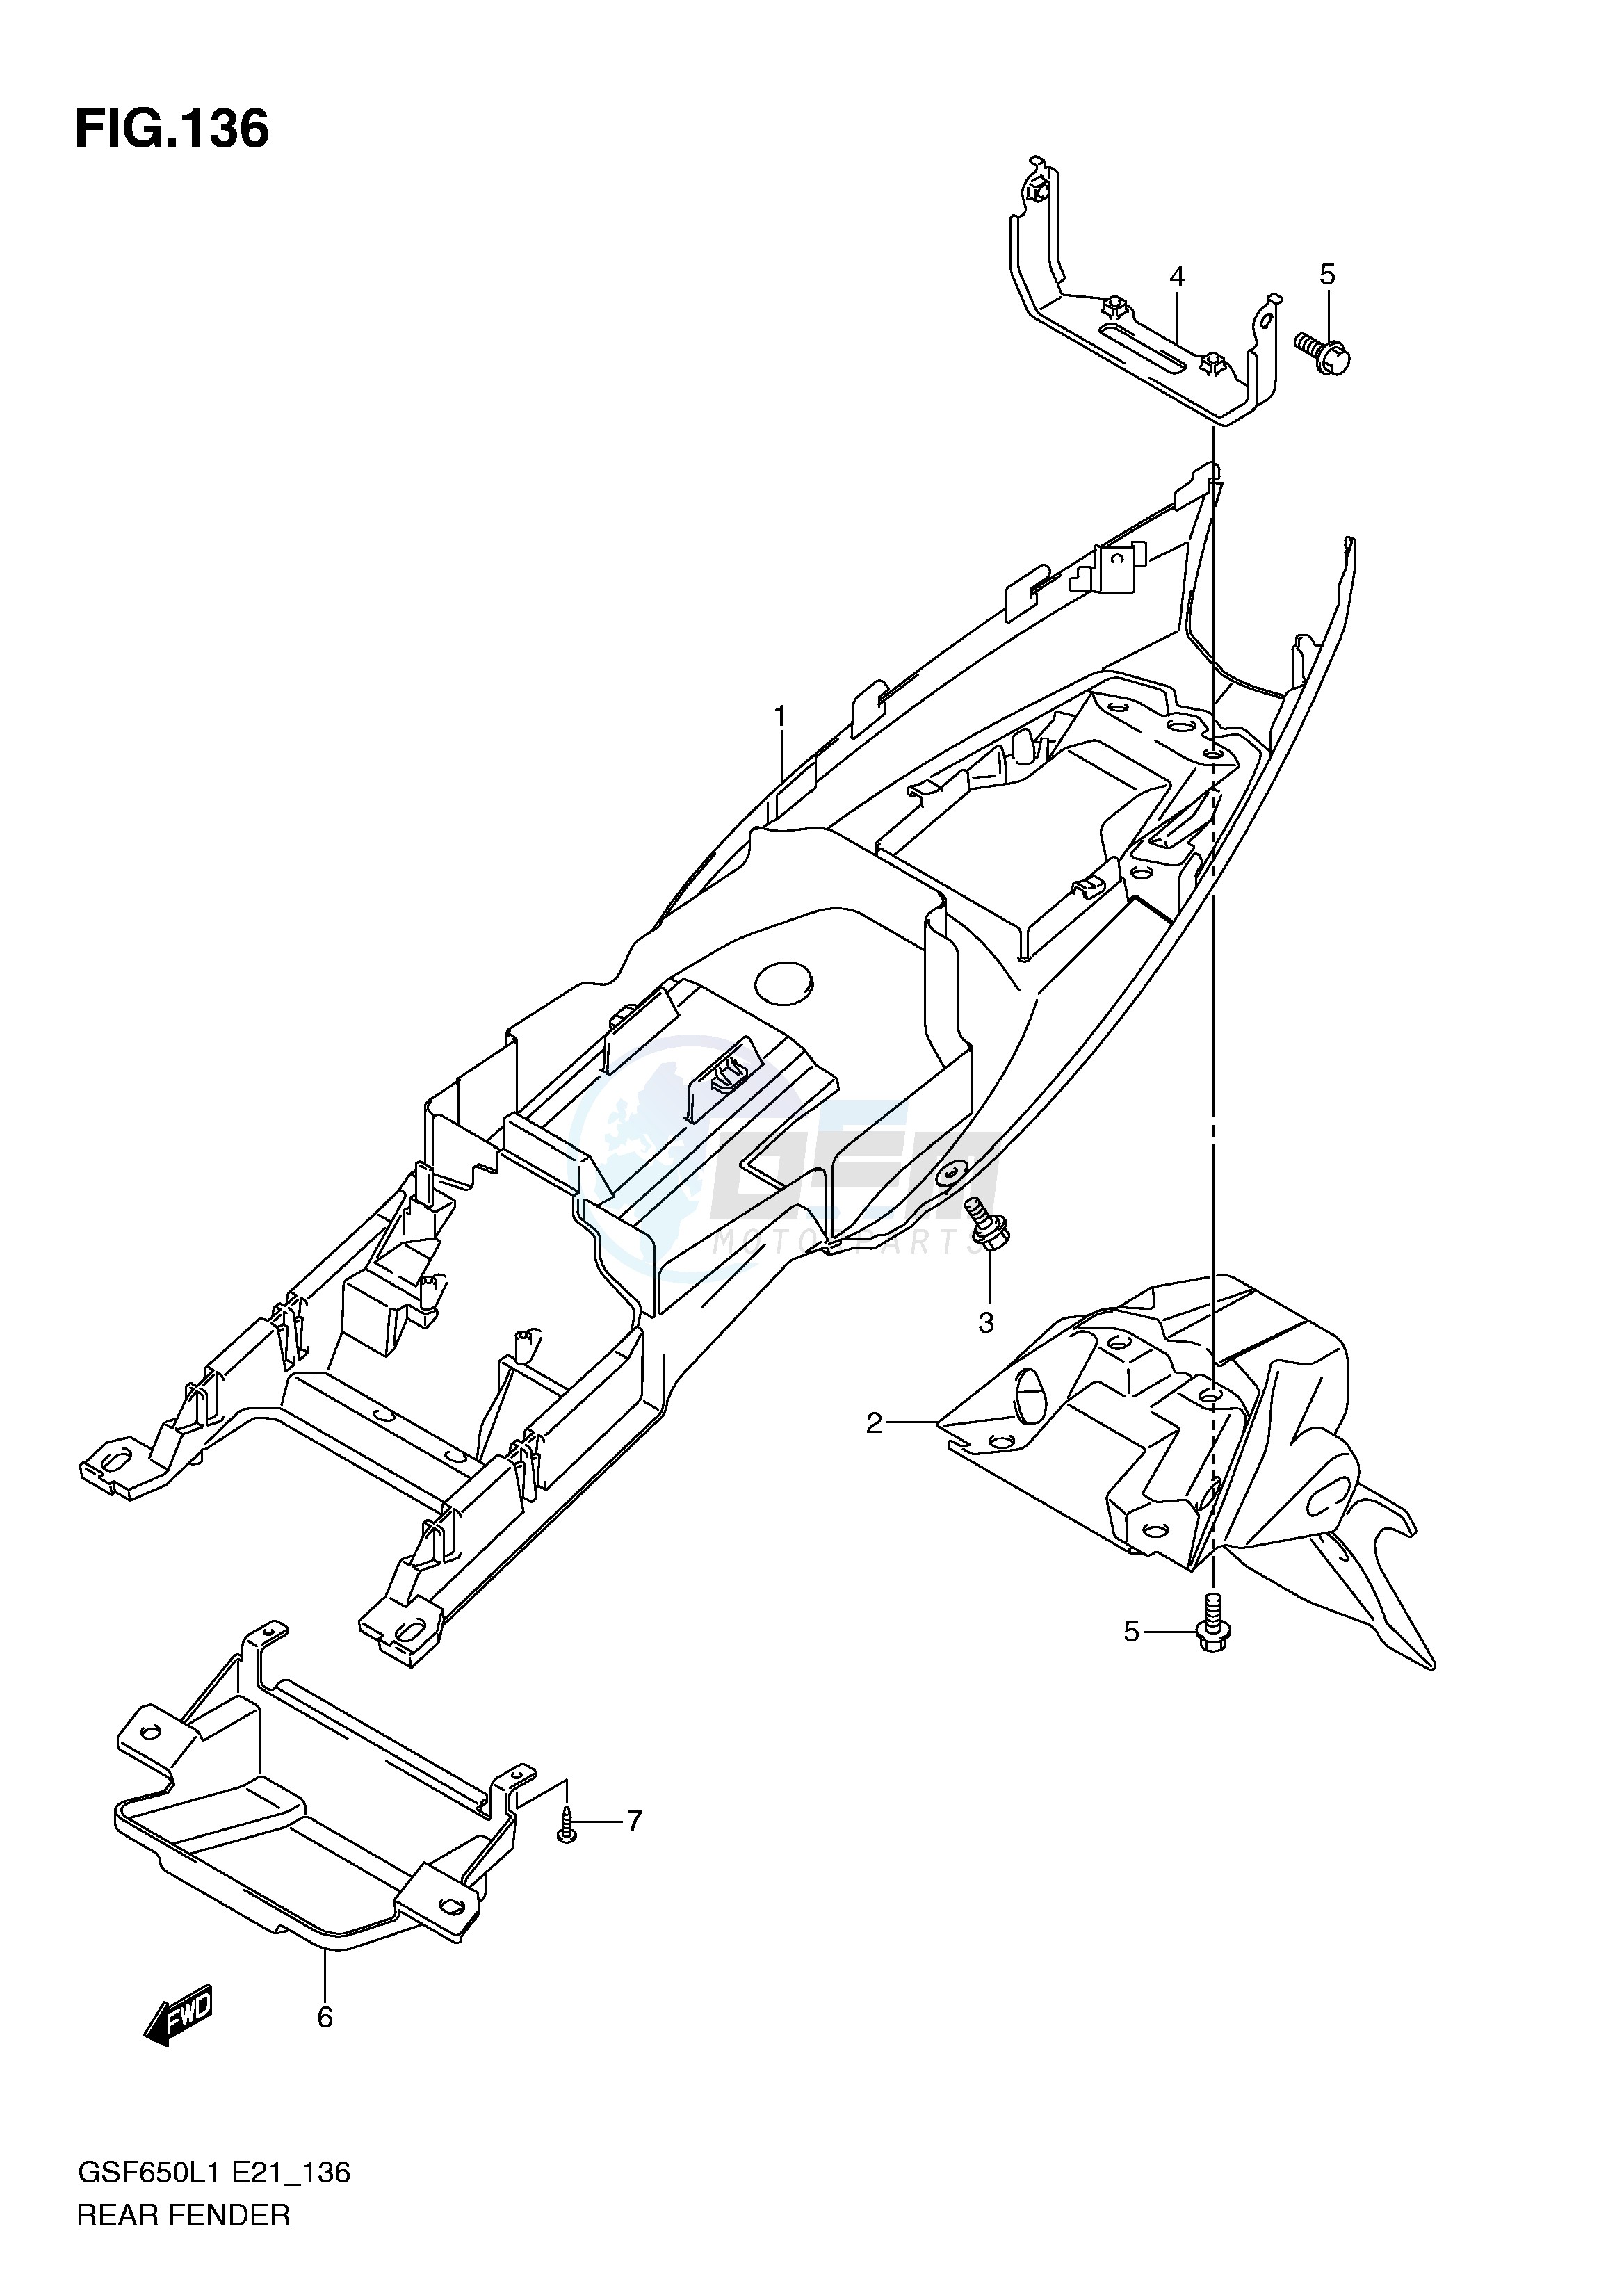 REAR FENDER (GSF650UL1 E21) blueprint